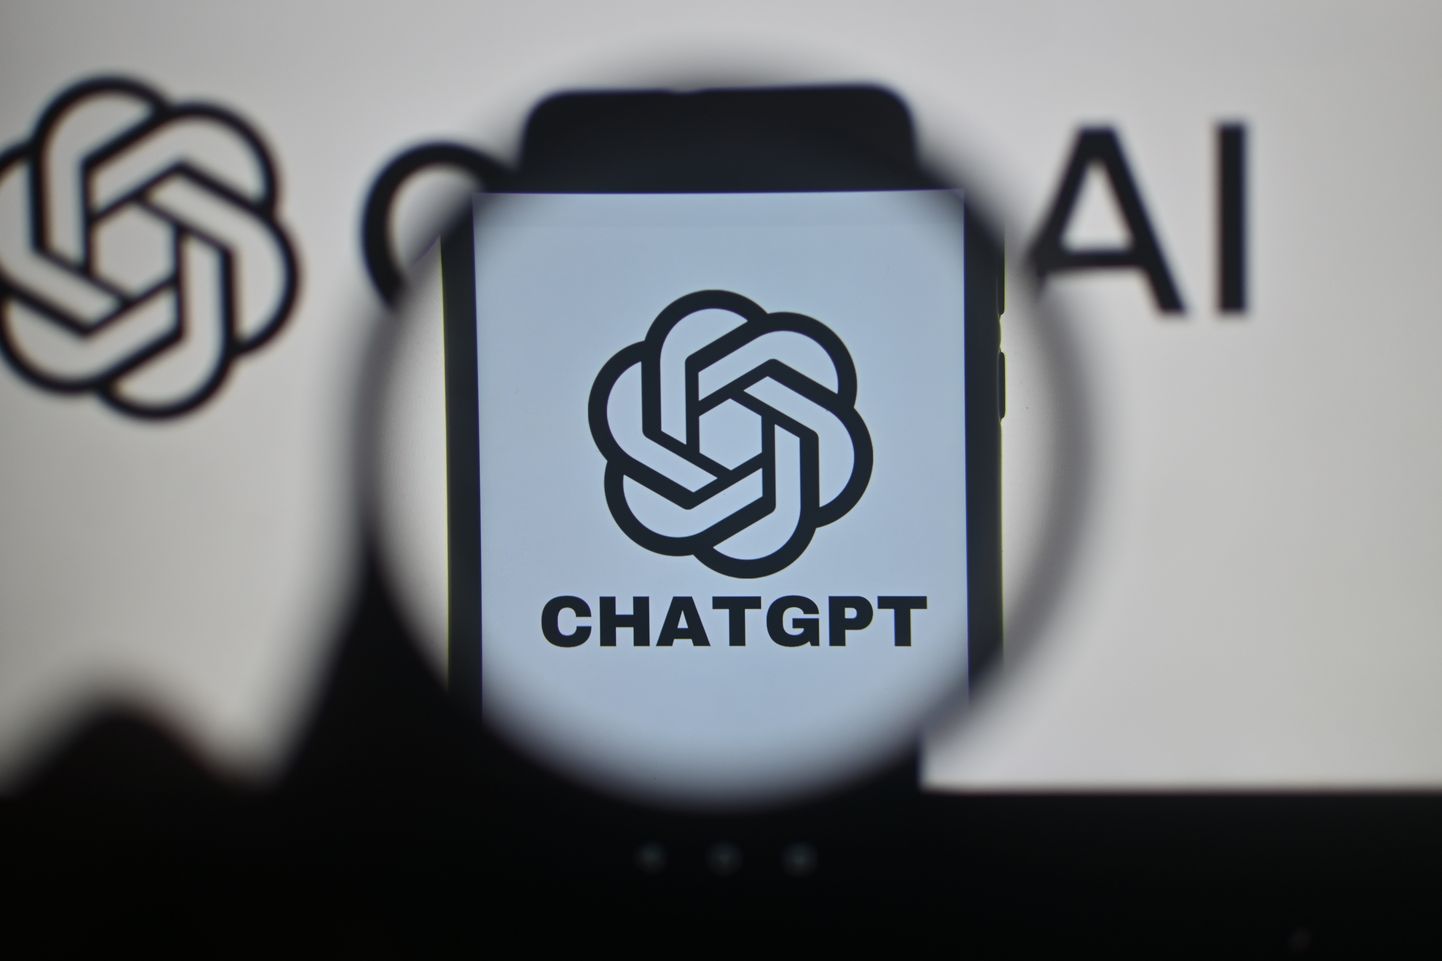 ChatGPT logo.